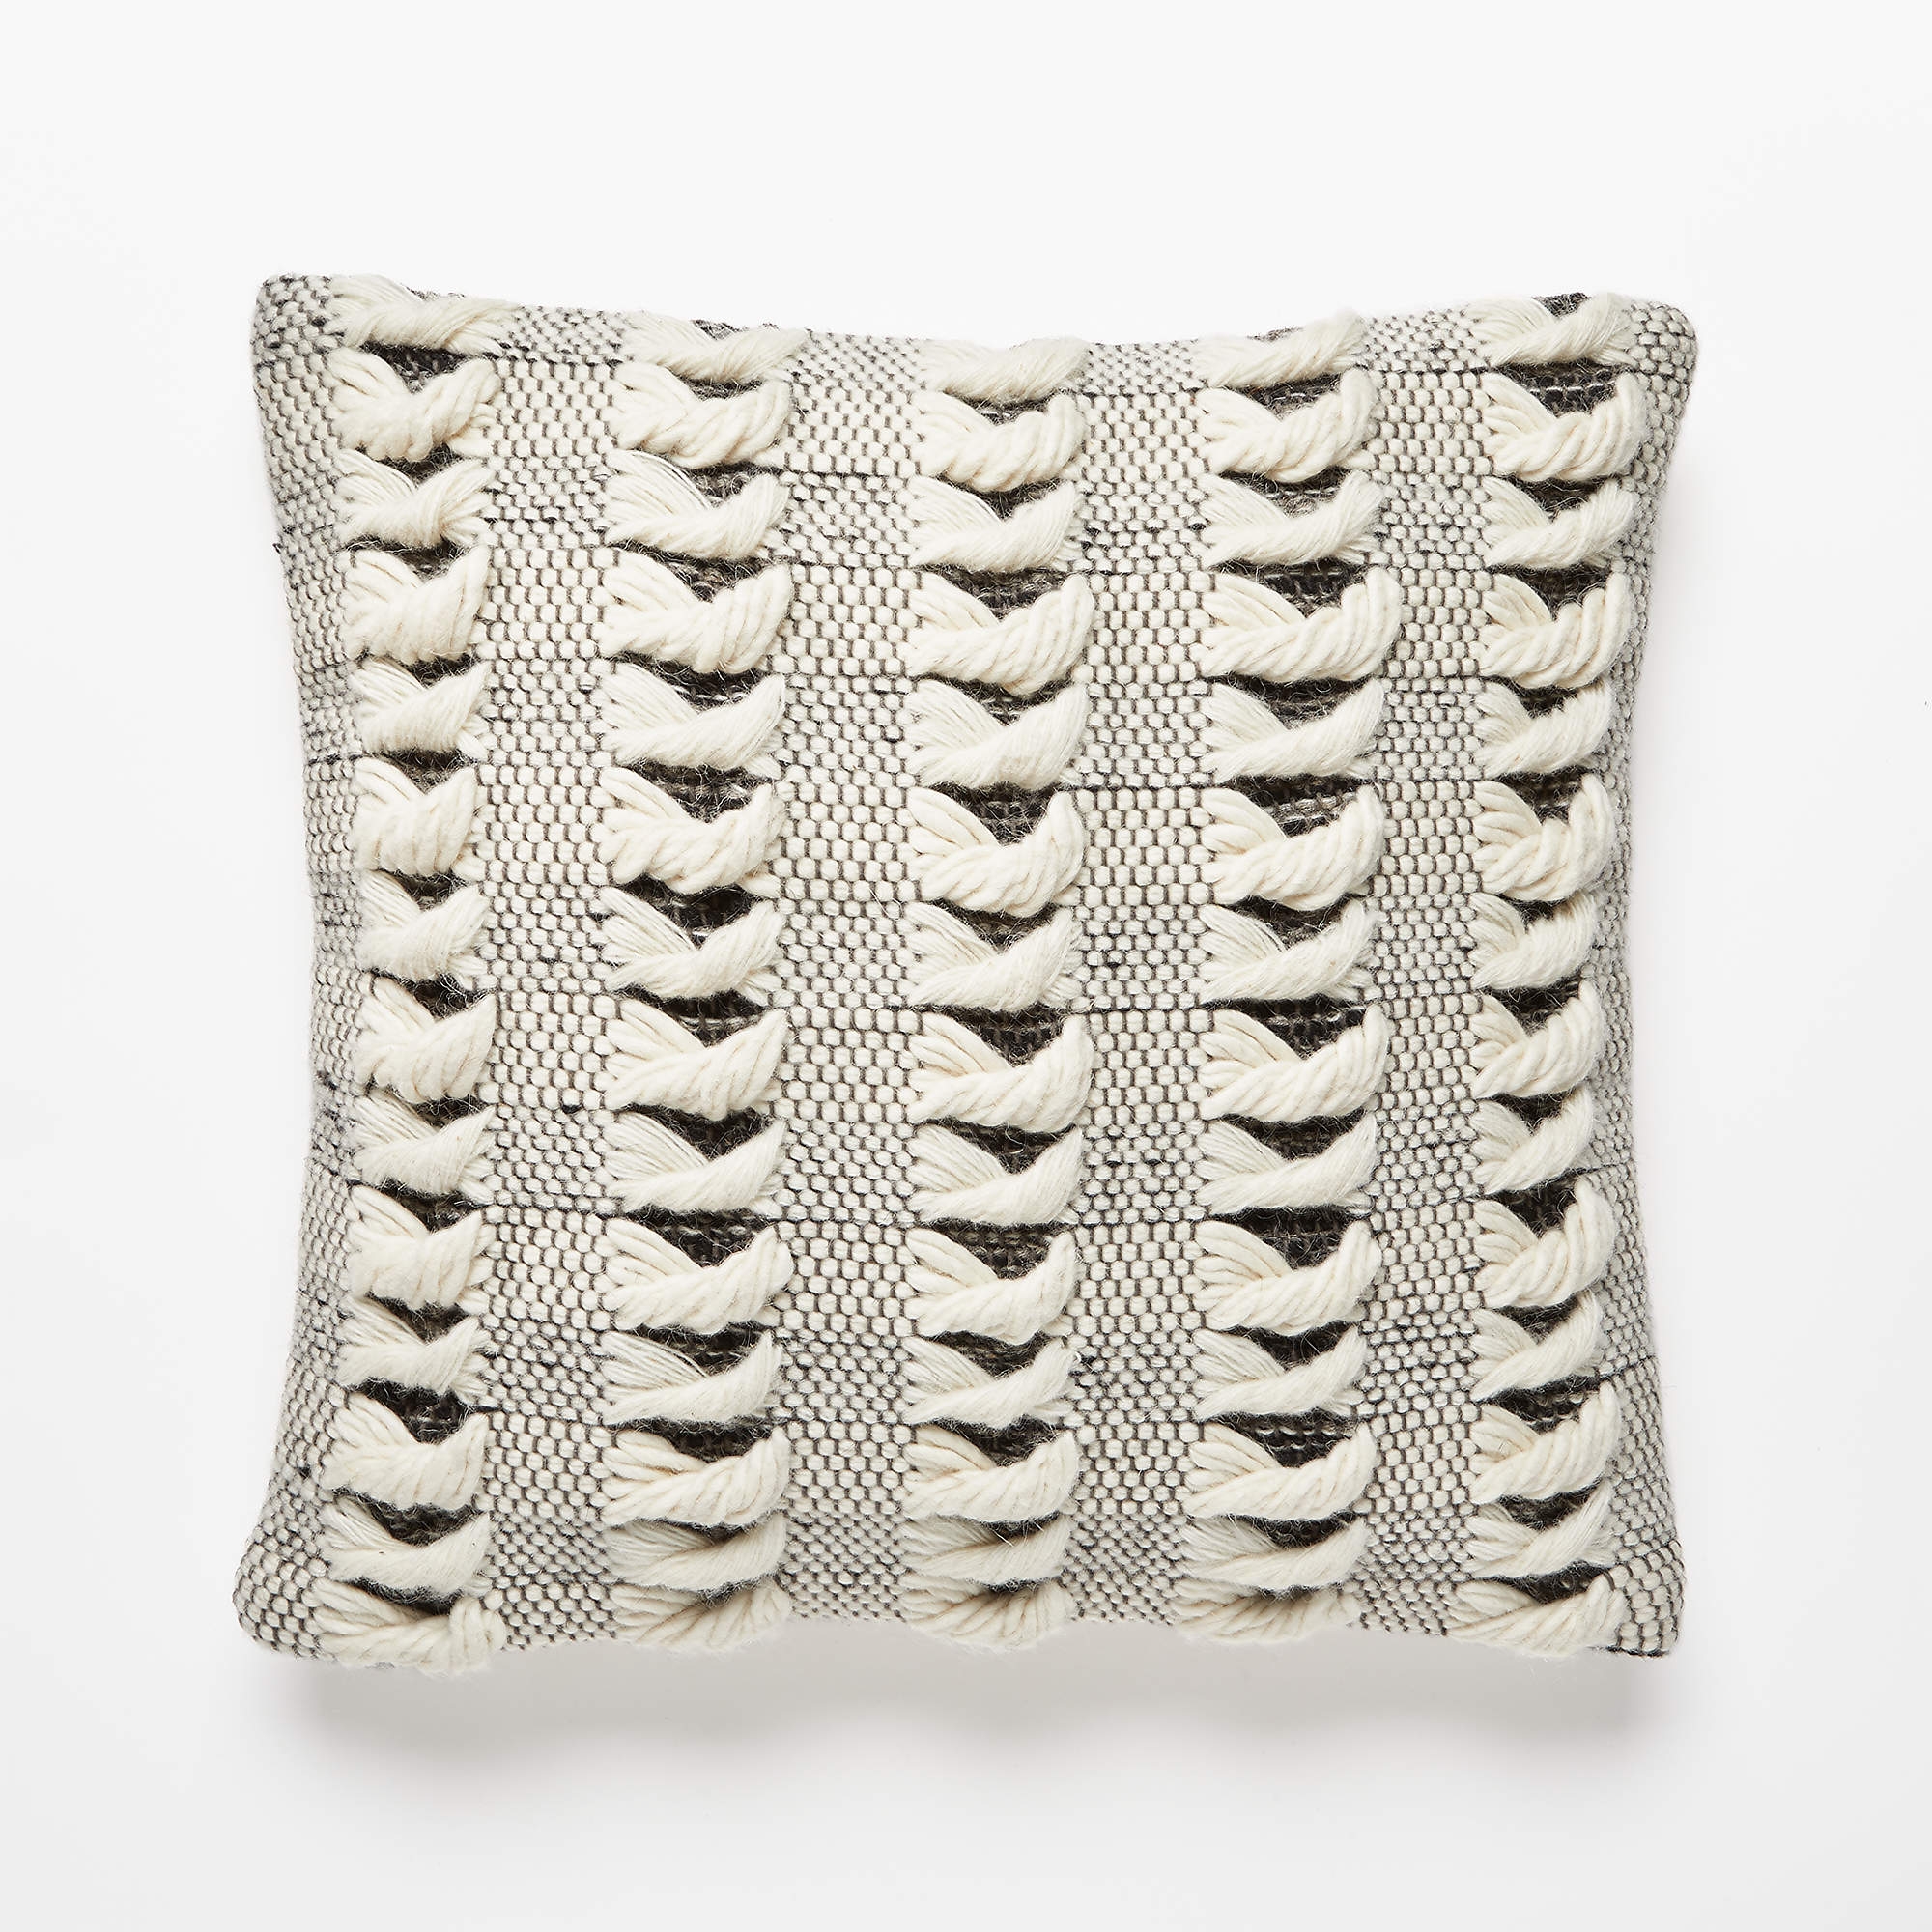 Simon Ivory White Wool Throw Pillow with Down-Alternative Insert 20" - Image 0